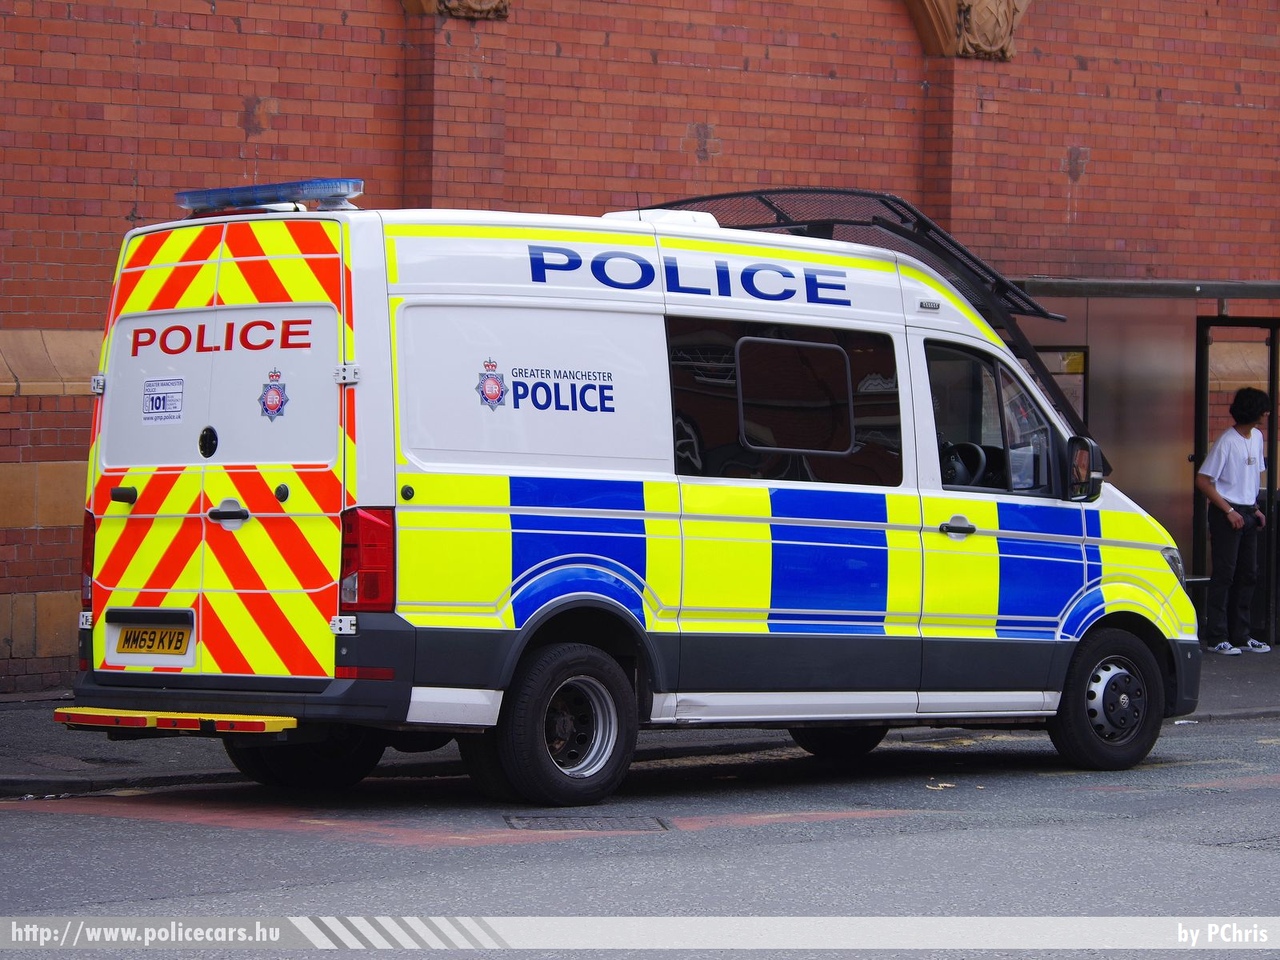 Volkswagen Crafter, fotó: PChris
Keywords: angol Anglia rendőr rendőrautó rendőrség english England police policecar